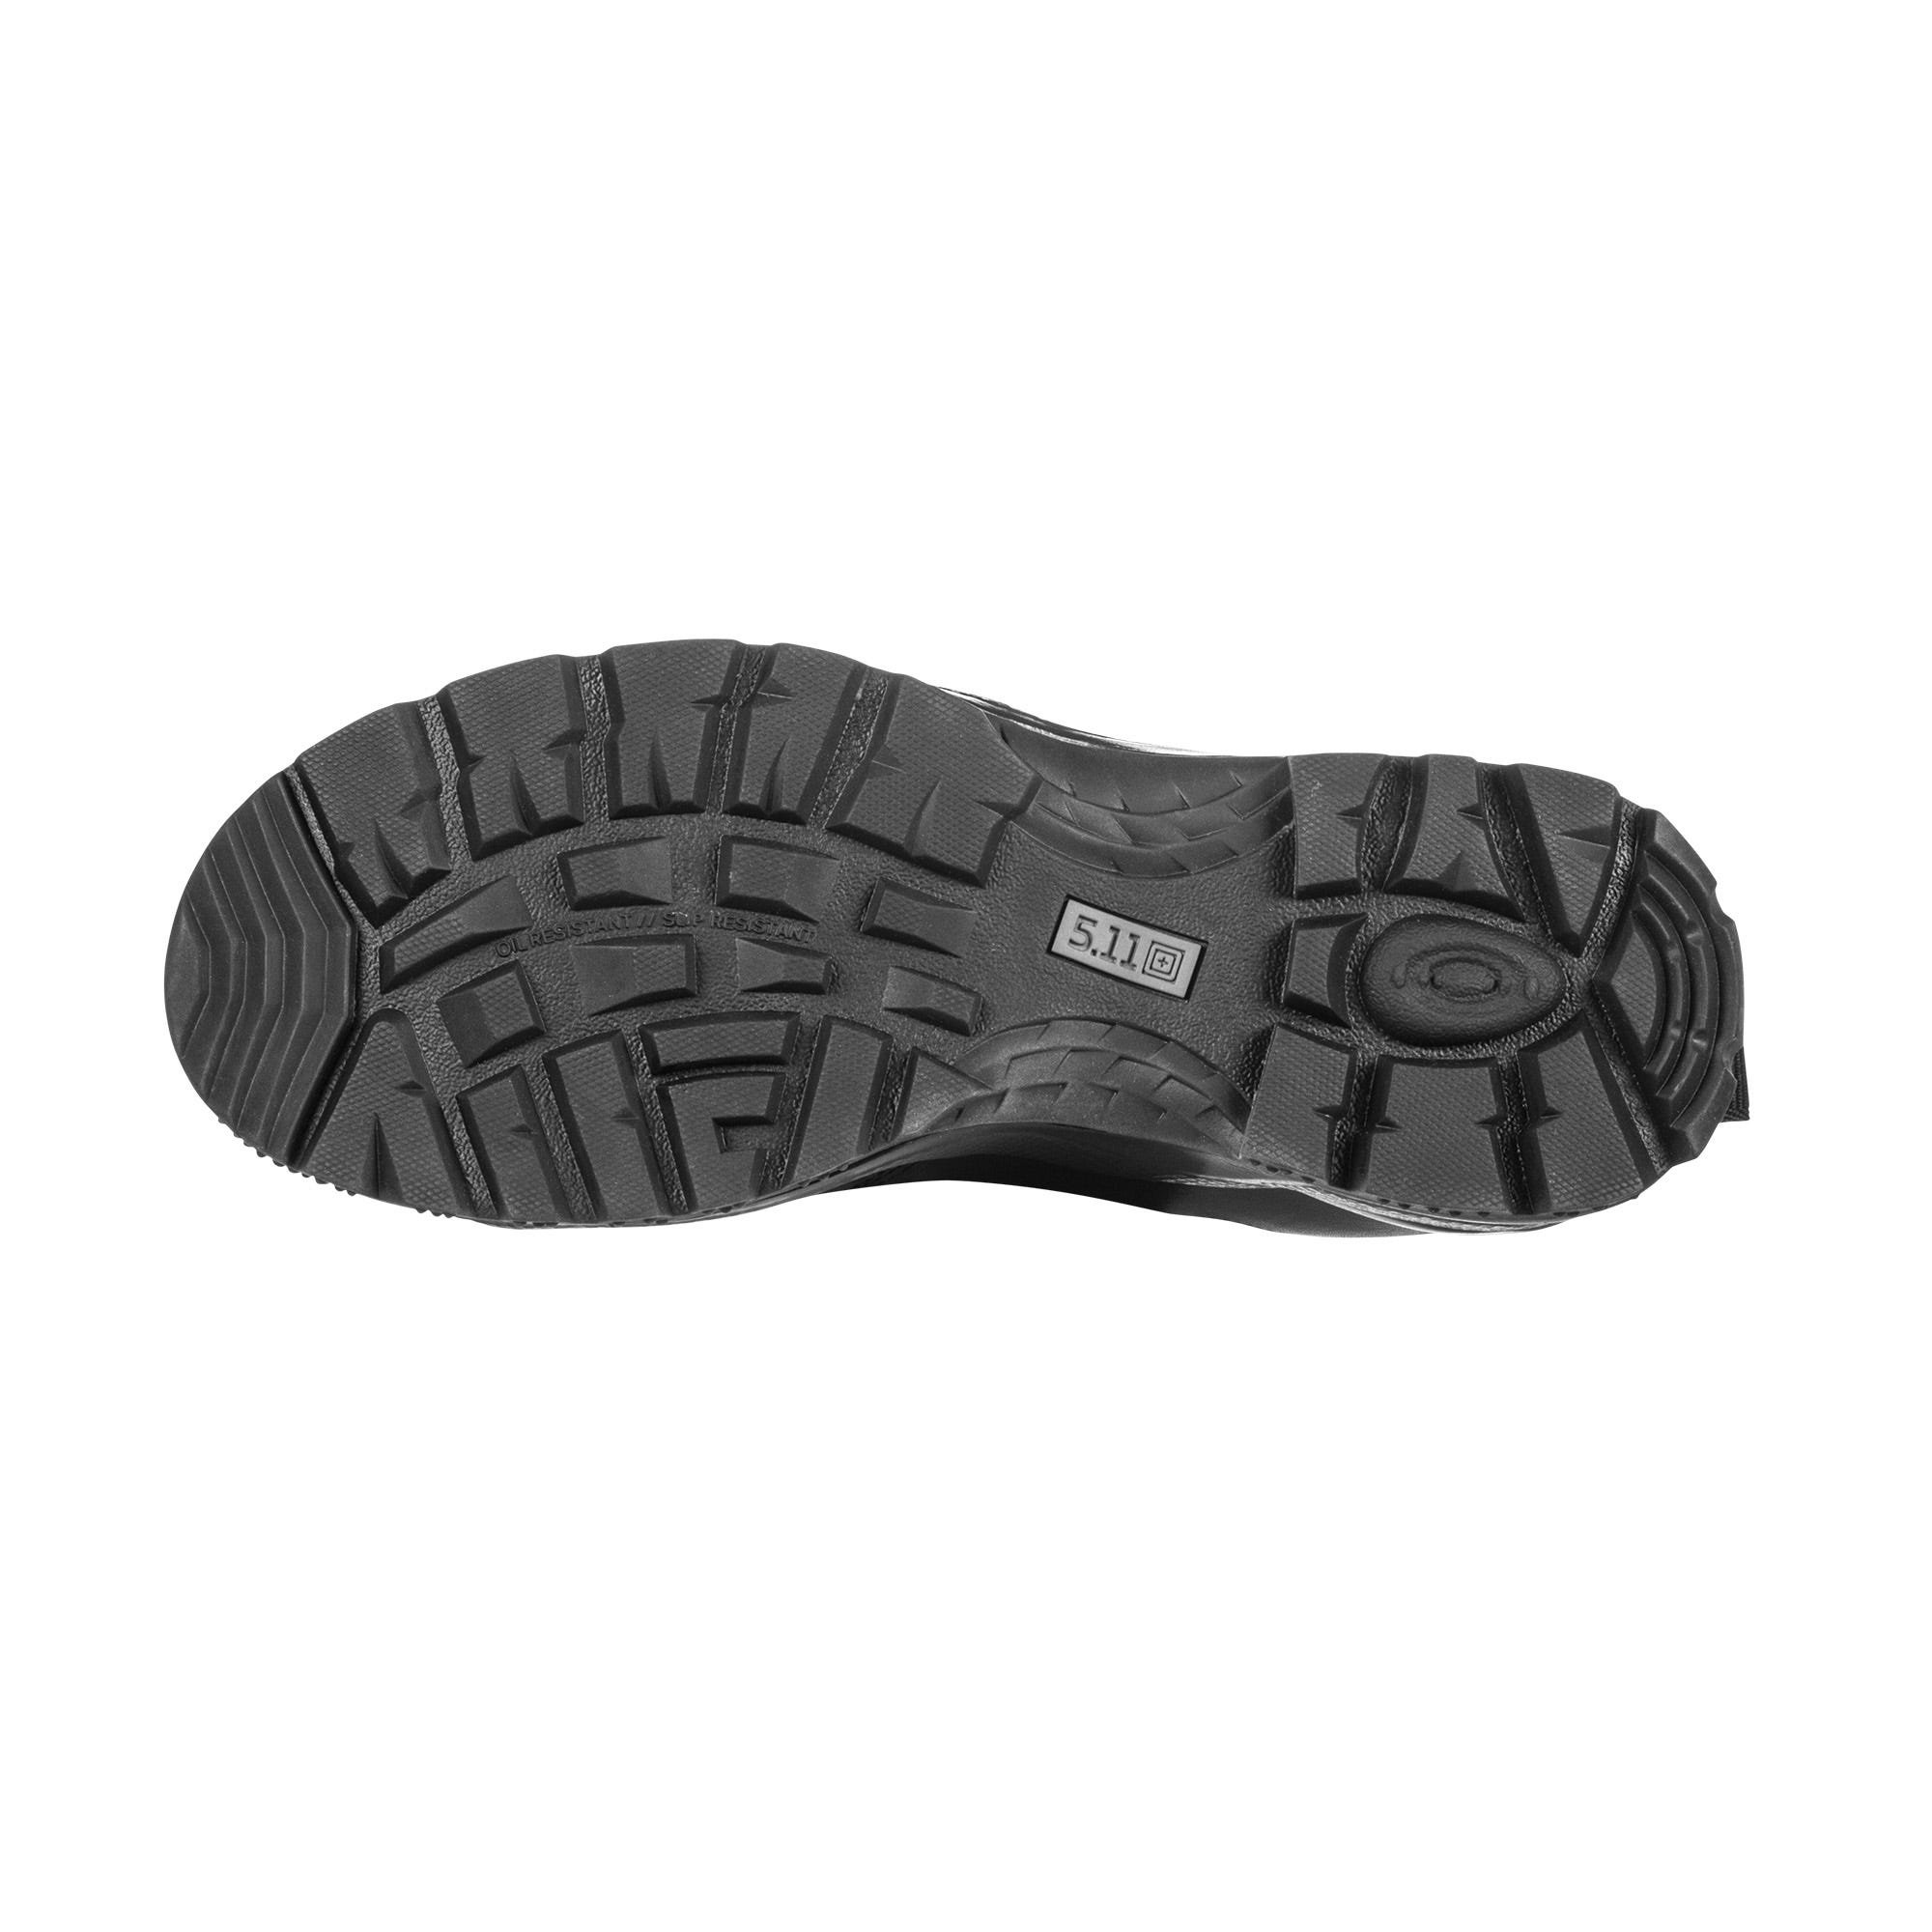 5.11 Work Gear Men's ATAC 2.0 8-Inch Storm Boots, Ortholite Footbed, Slip-Resistant Outsole, Black, 6 Regular, Style 12392 - image 5 of 7